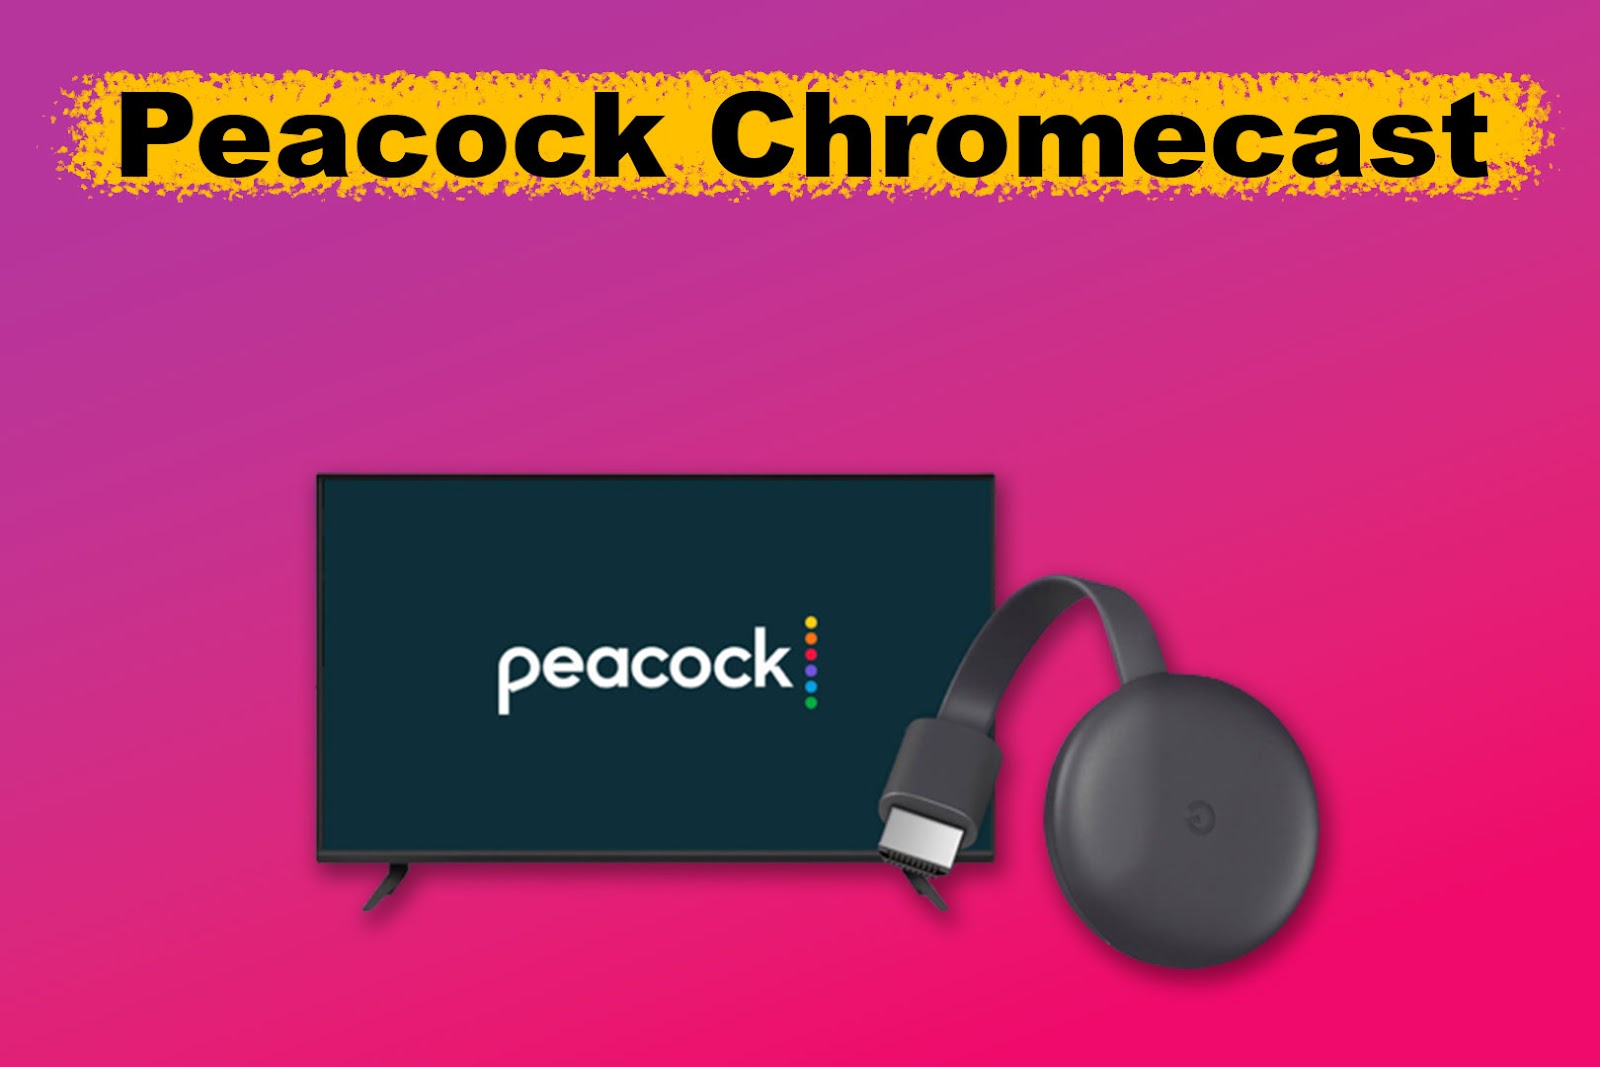 Peacock Chromecast